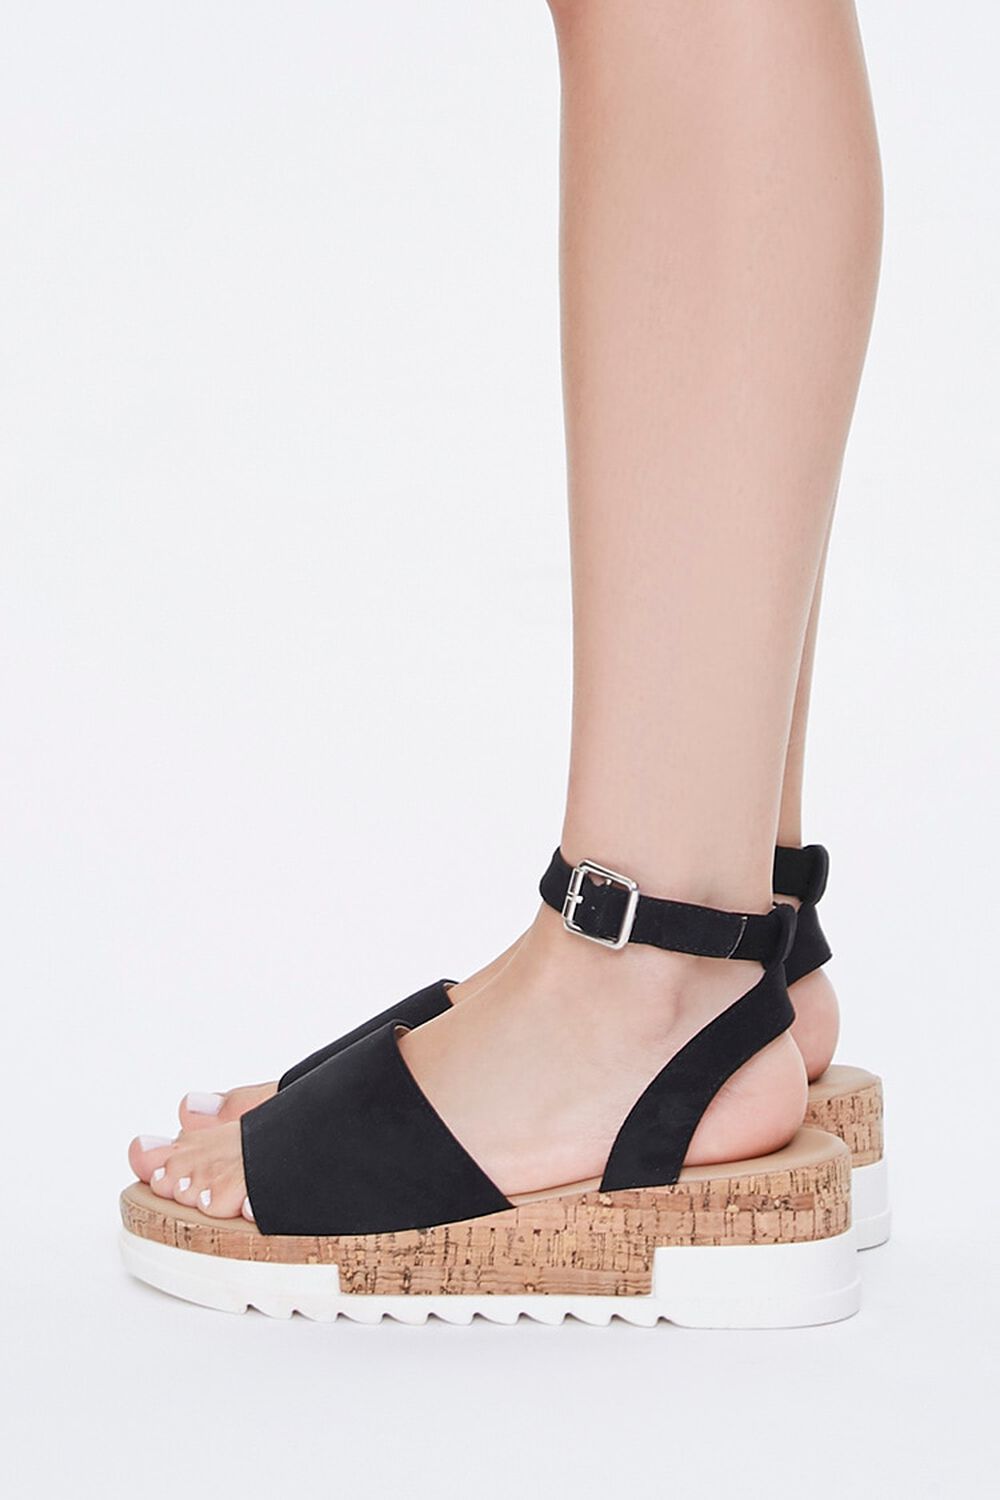 BLACK Open-Toe Cork Sandals, image 2